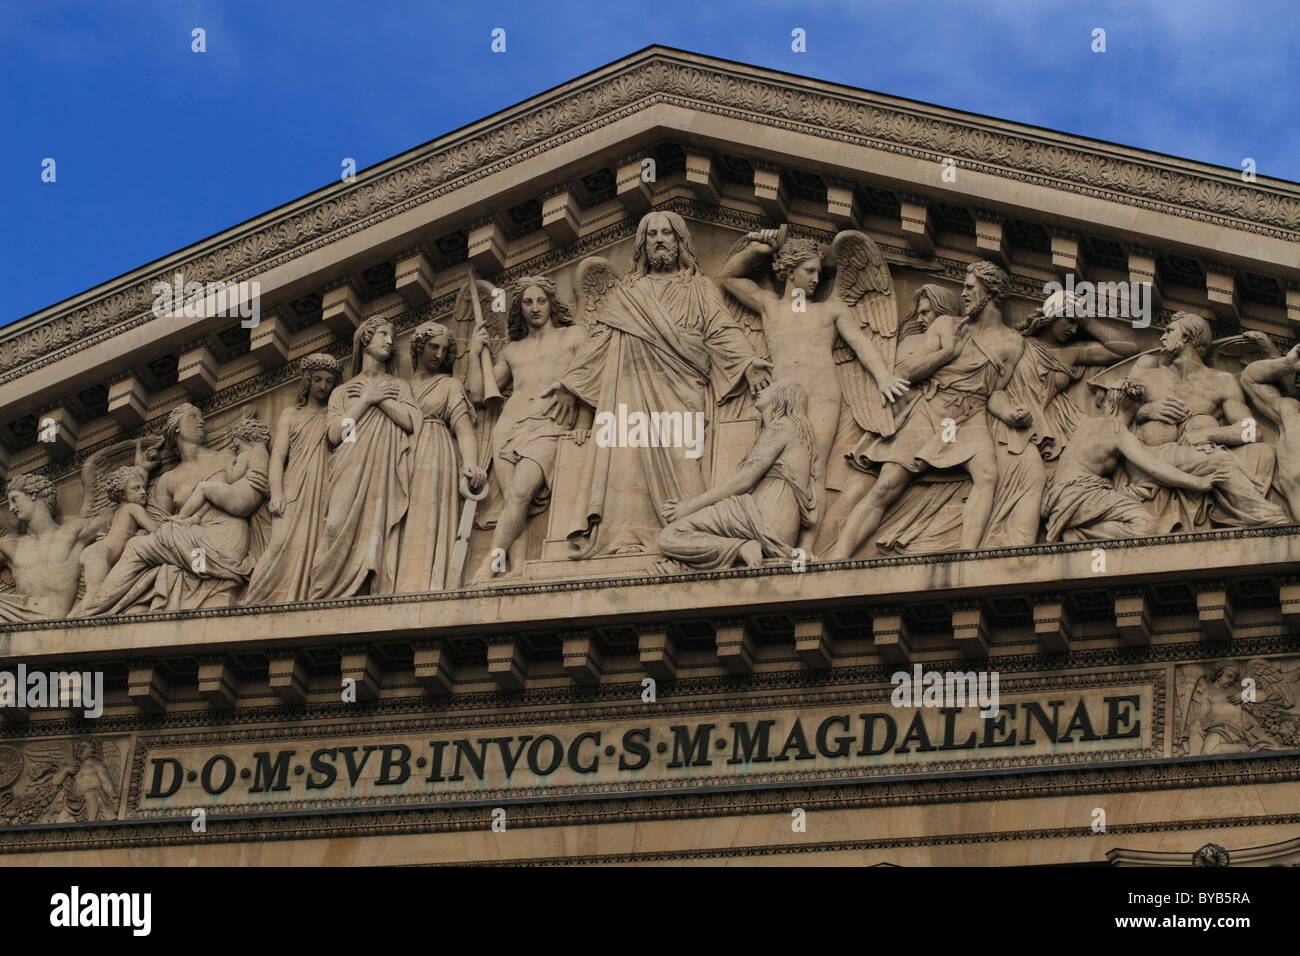 Eglise de la Madeleine, Madeleine Church, frieze in a Classical-style, 8th Arrondissement, Paris, France, Europe Stock Photo